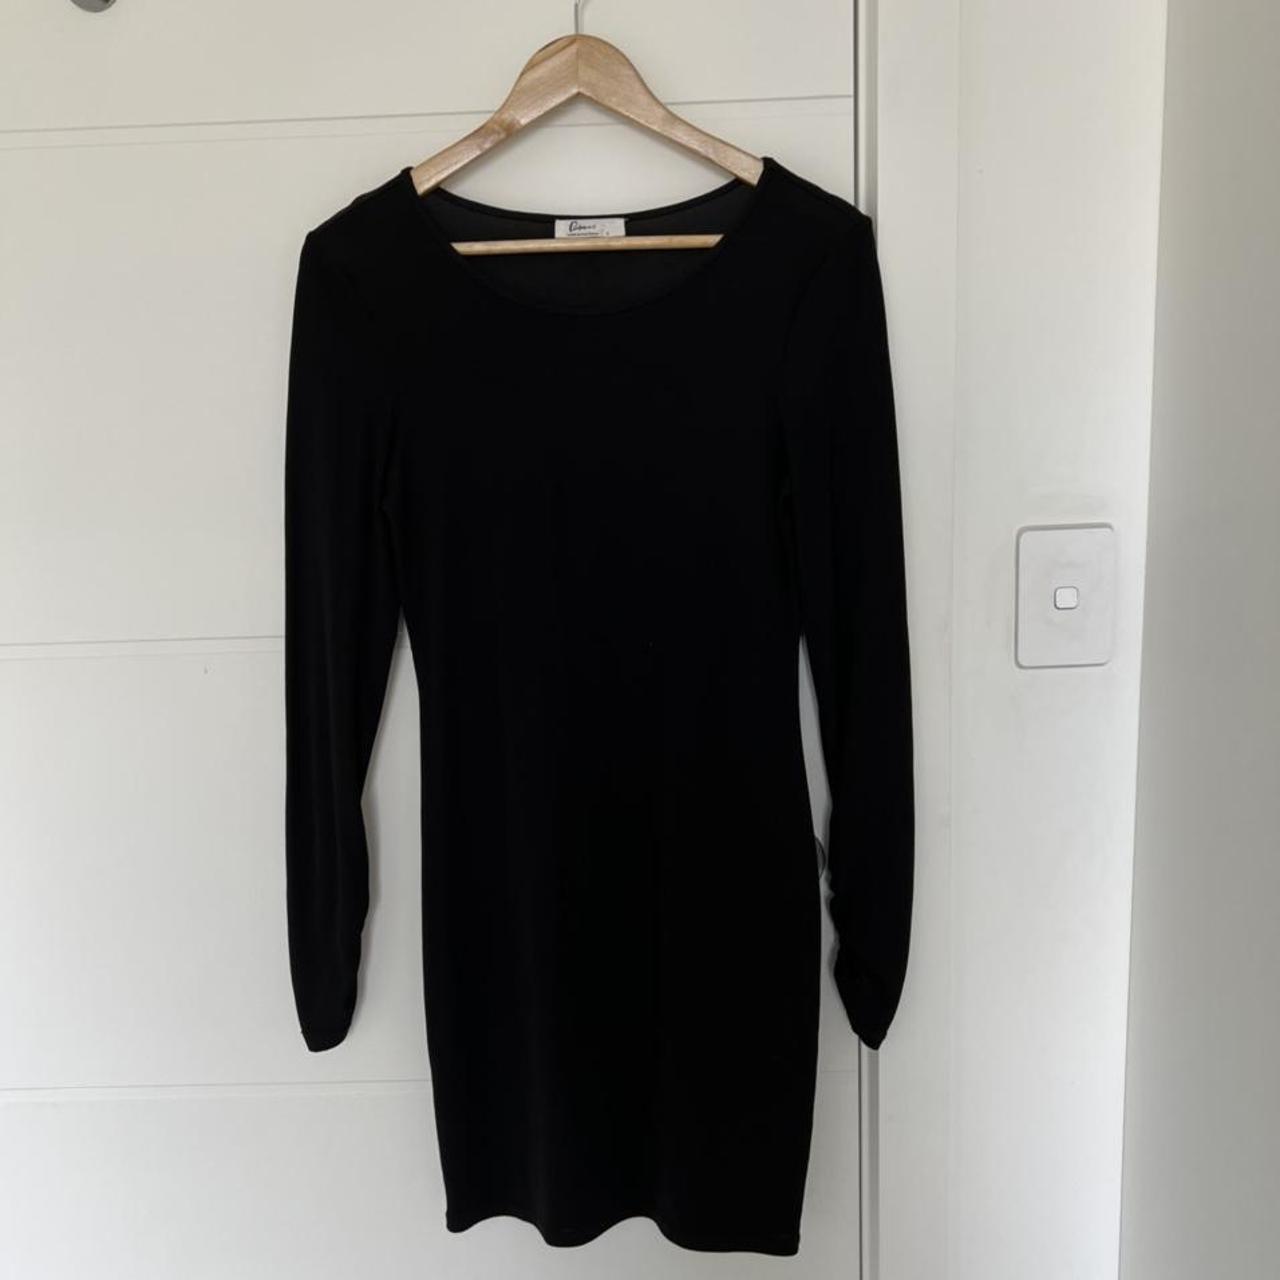 Portmans little black dress - size small (8/10) - Depop